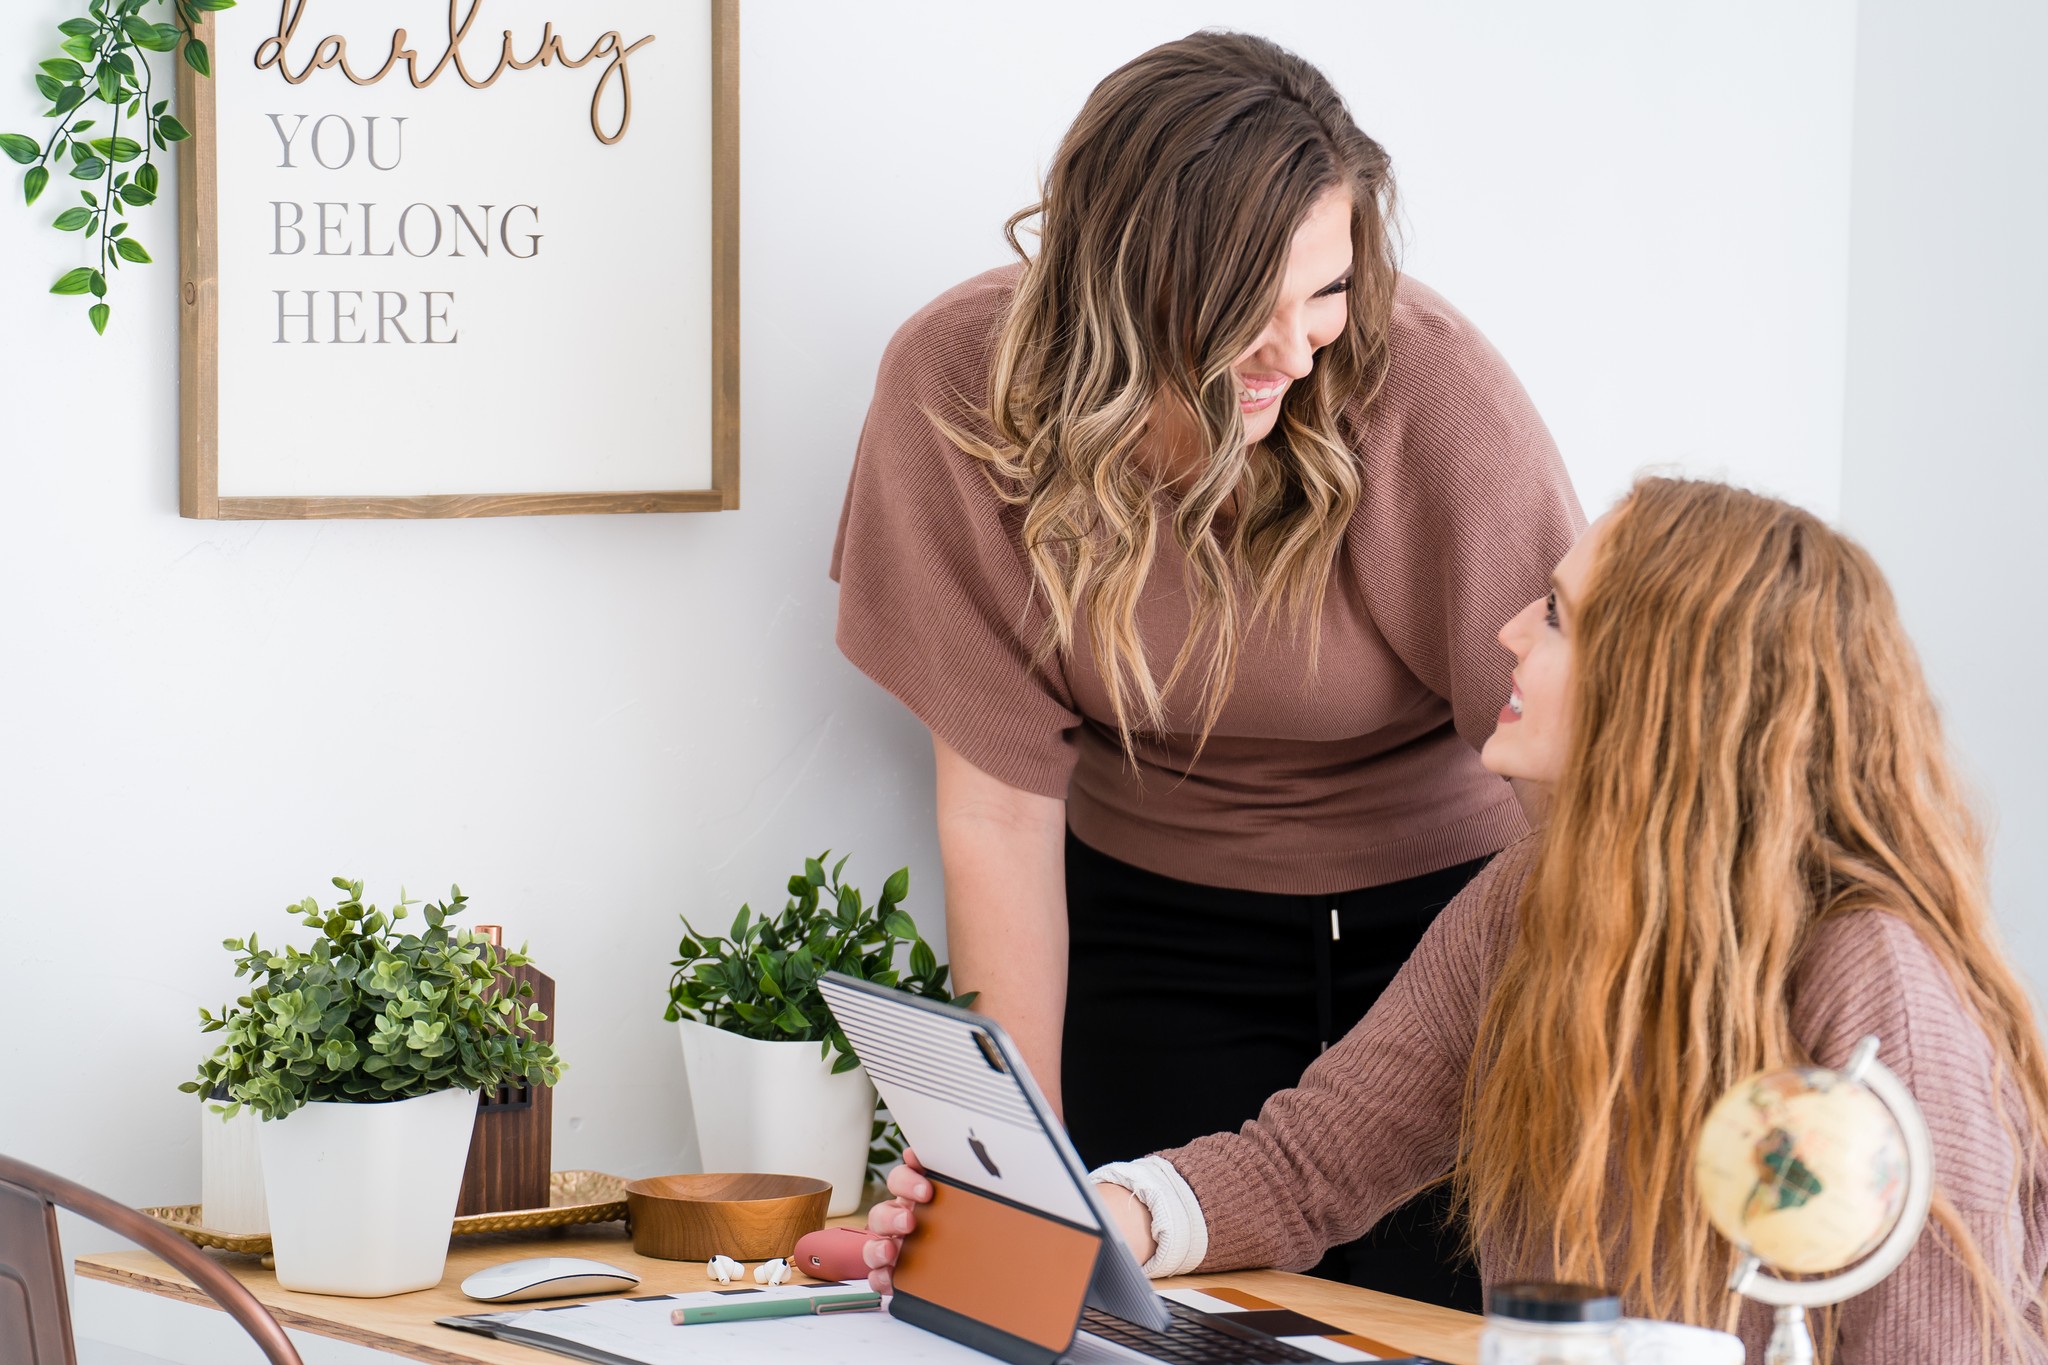 Mindset coaching women entrepreneurs, teila marie and client work together at desk smiling